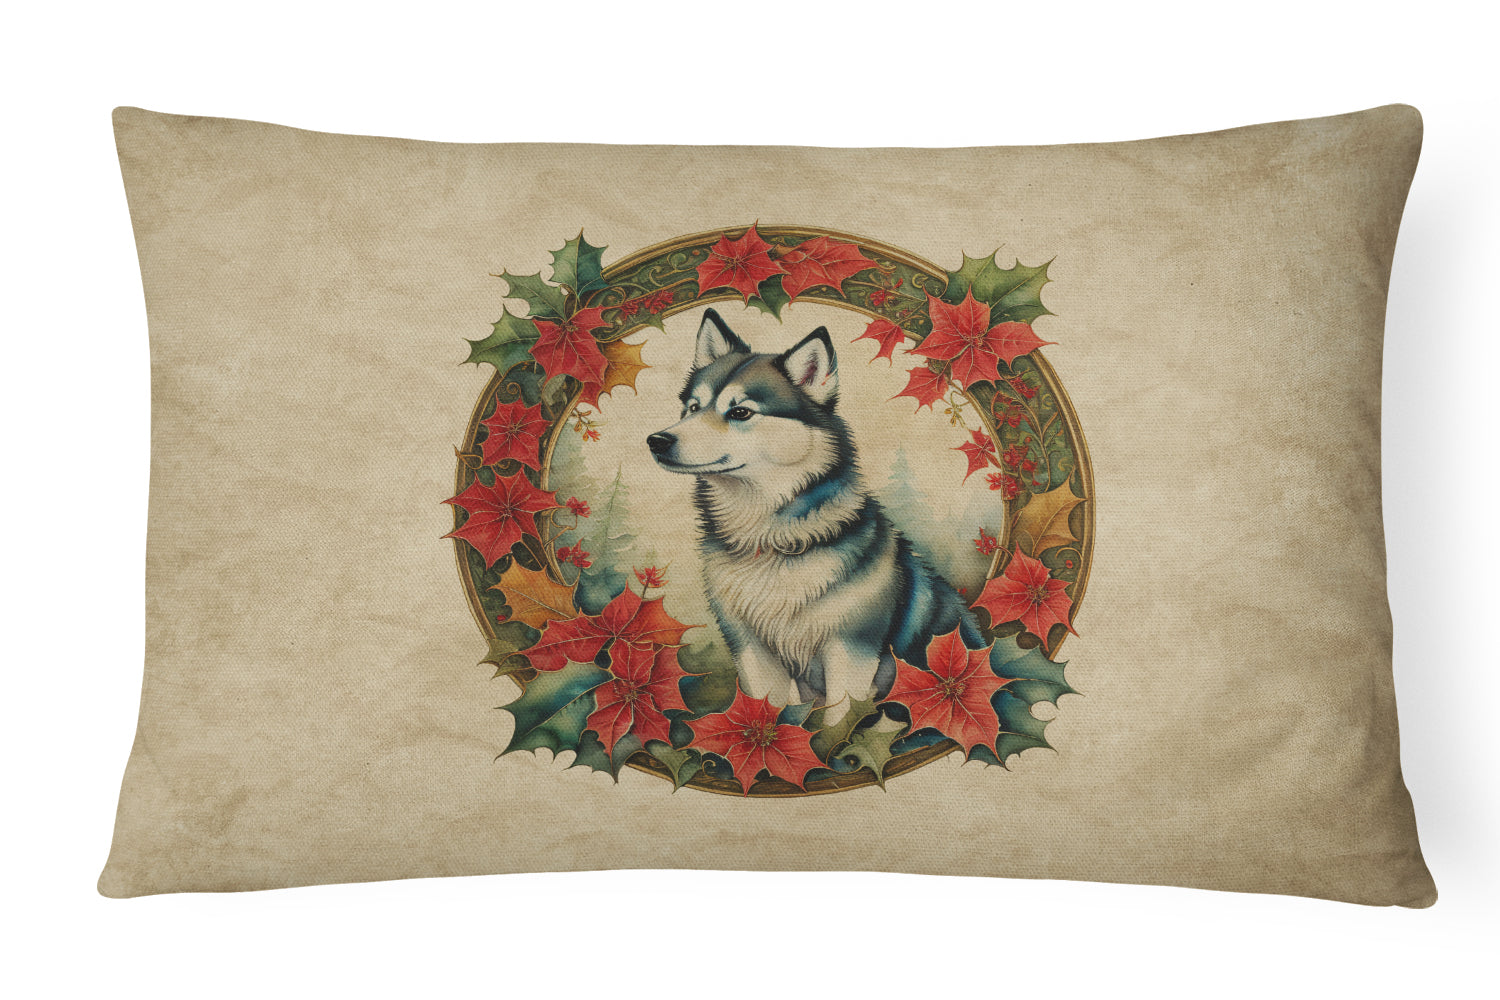 Buy this Alaskan Klee Kai Christmas Flowers Throw Pillow